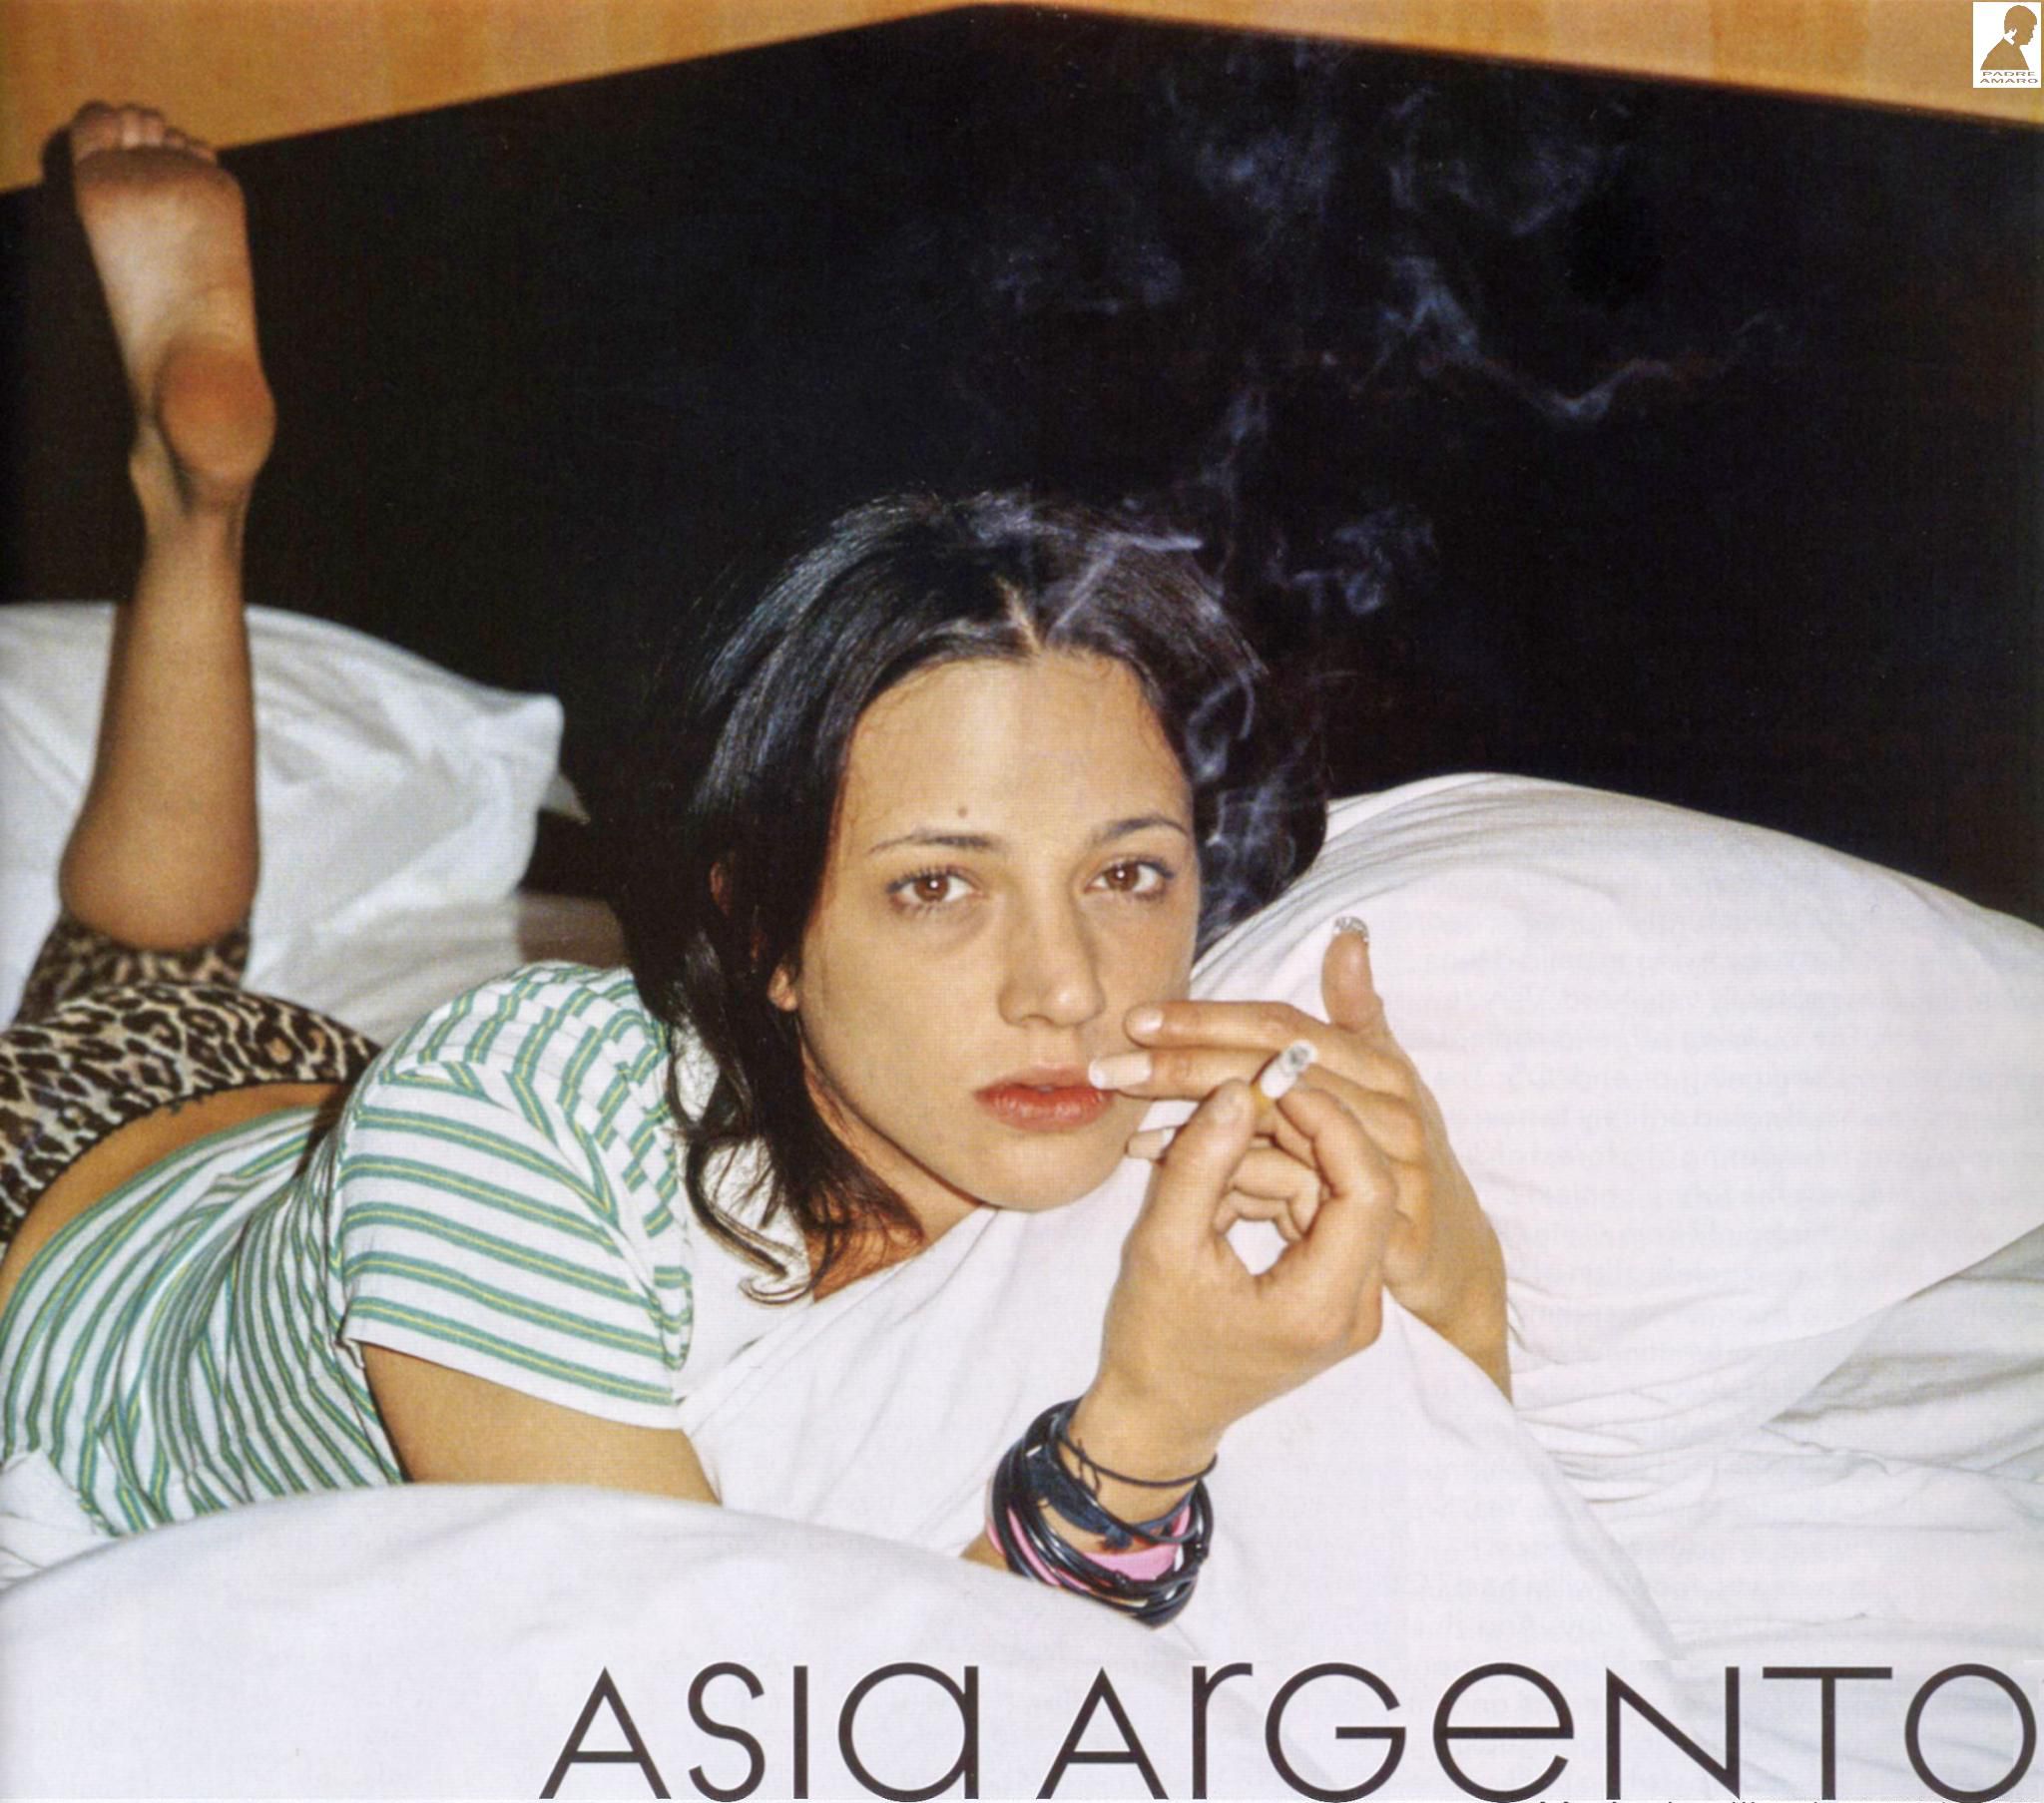 Asia-Argento-Feet-35577.jpg.